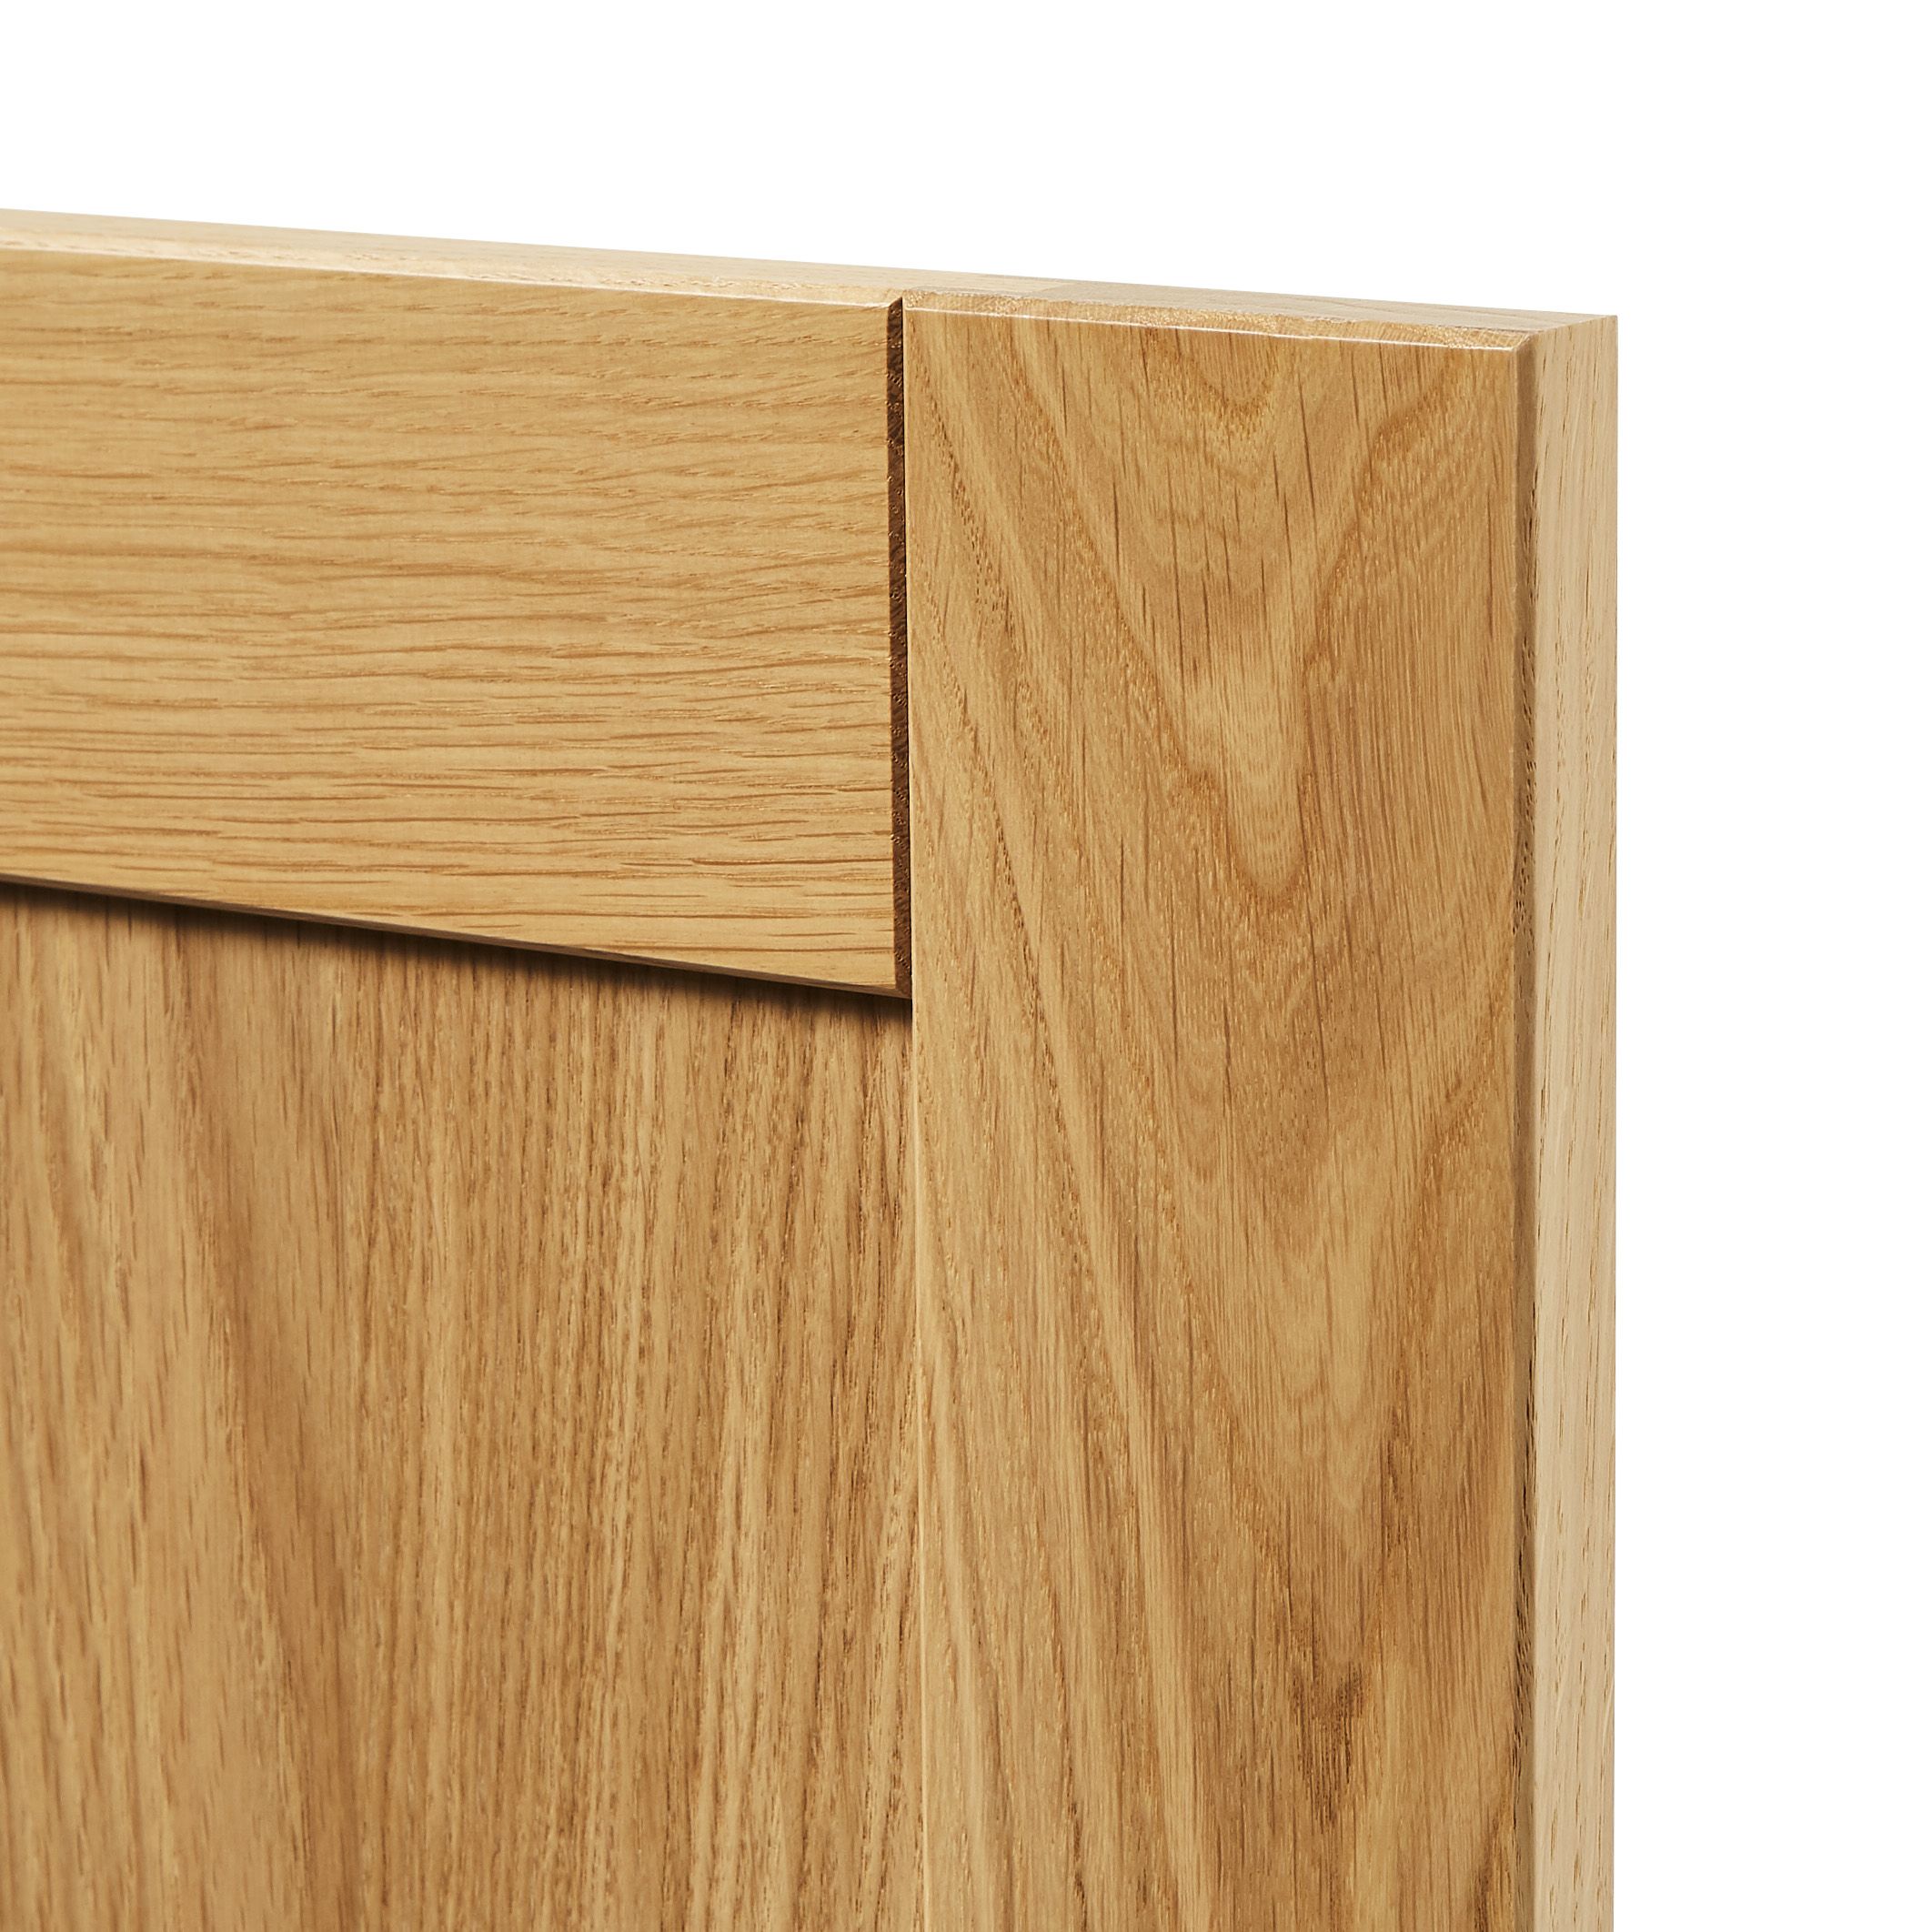 GoodHome Verbena Natural oak shaker Appliance Cabinet door (W)600mm (H)687mm (T)20mm